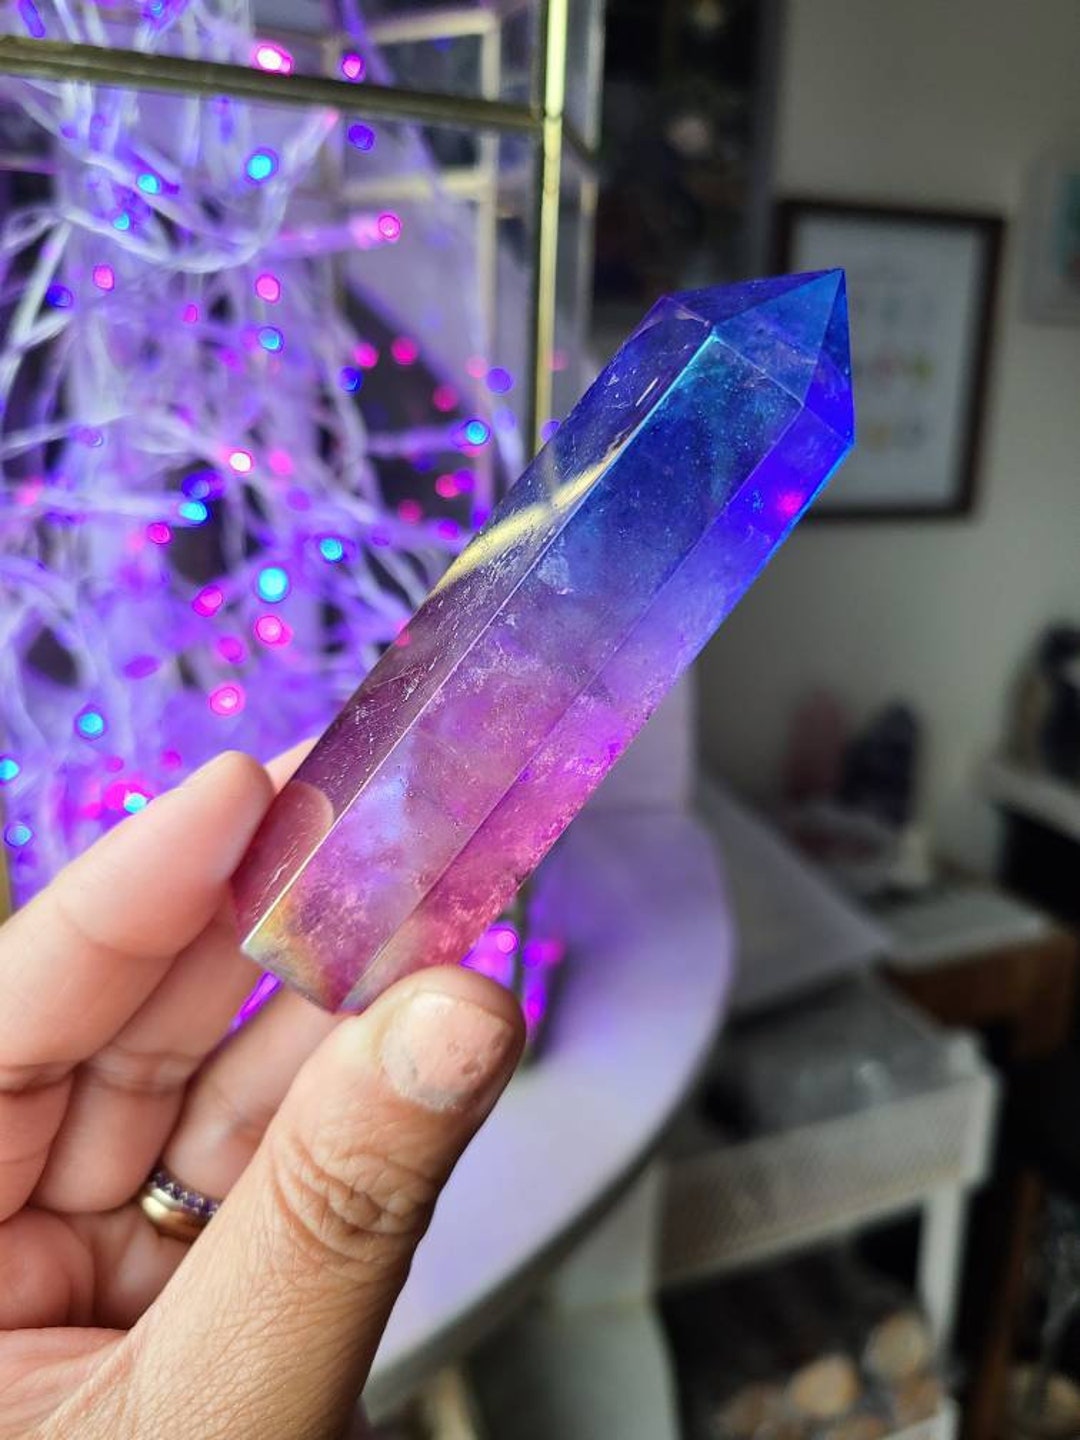 Healing Crystal Stickers Pack - Quartz - Stones - Aura quartz